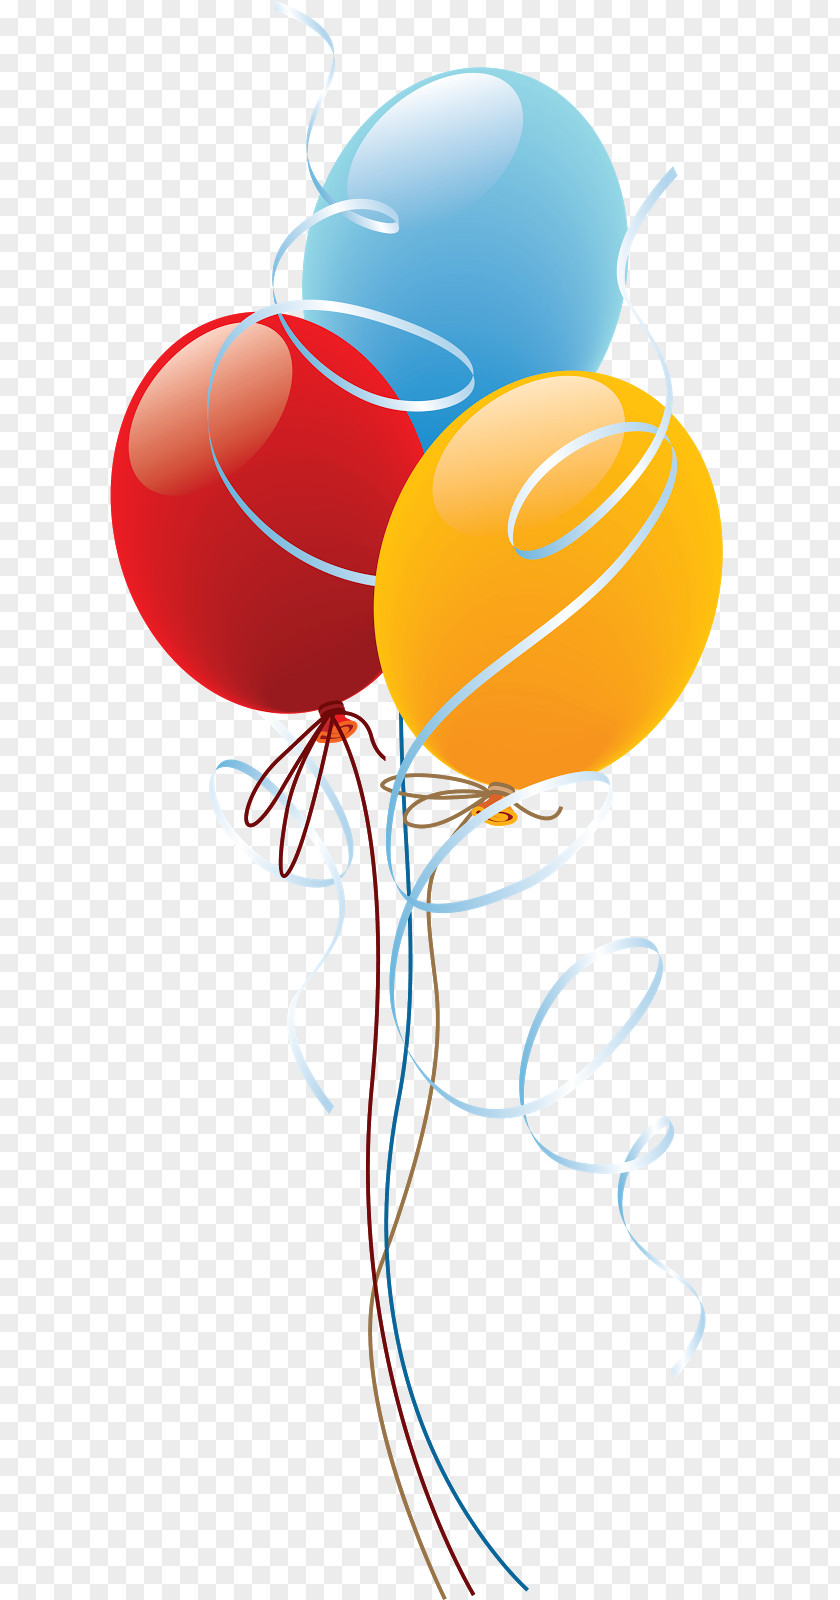 Cartoon Birthday Cake Balloon Party Clip Art PNG